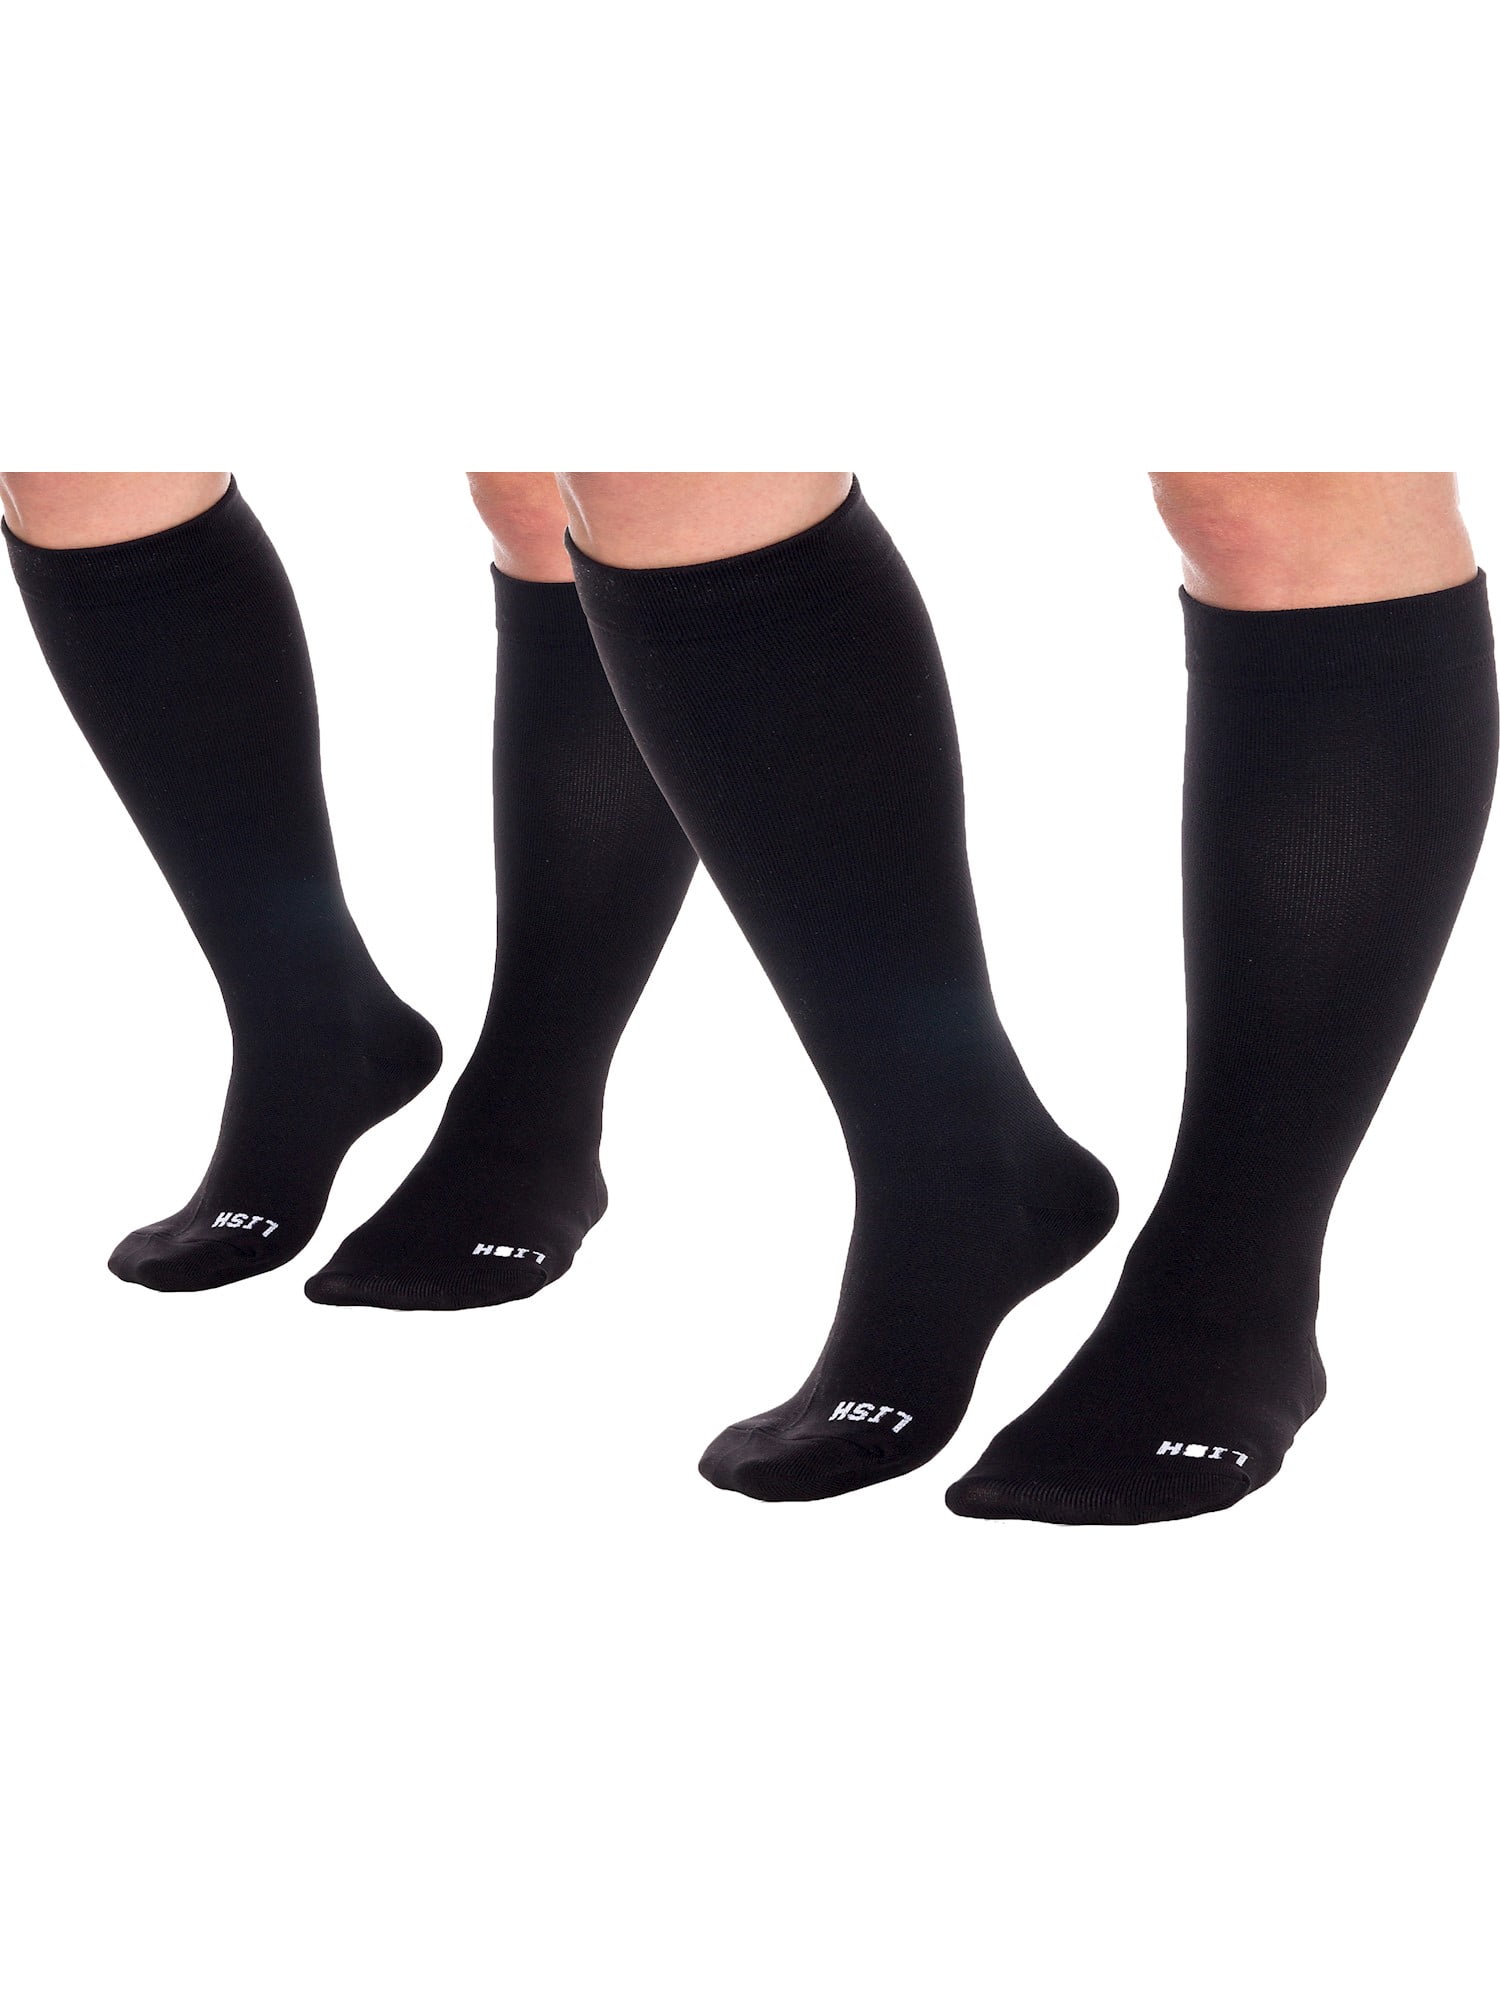 HAPPIShare Plus Size Stockings for Women Suspender Pantyhose Fishnet Tights Black Thigh High Stocking